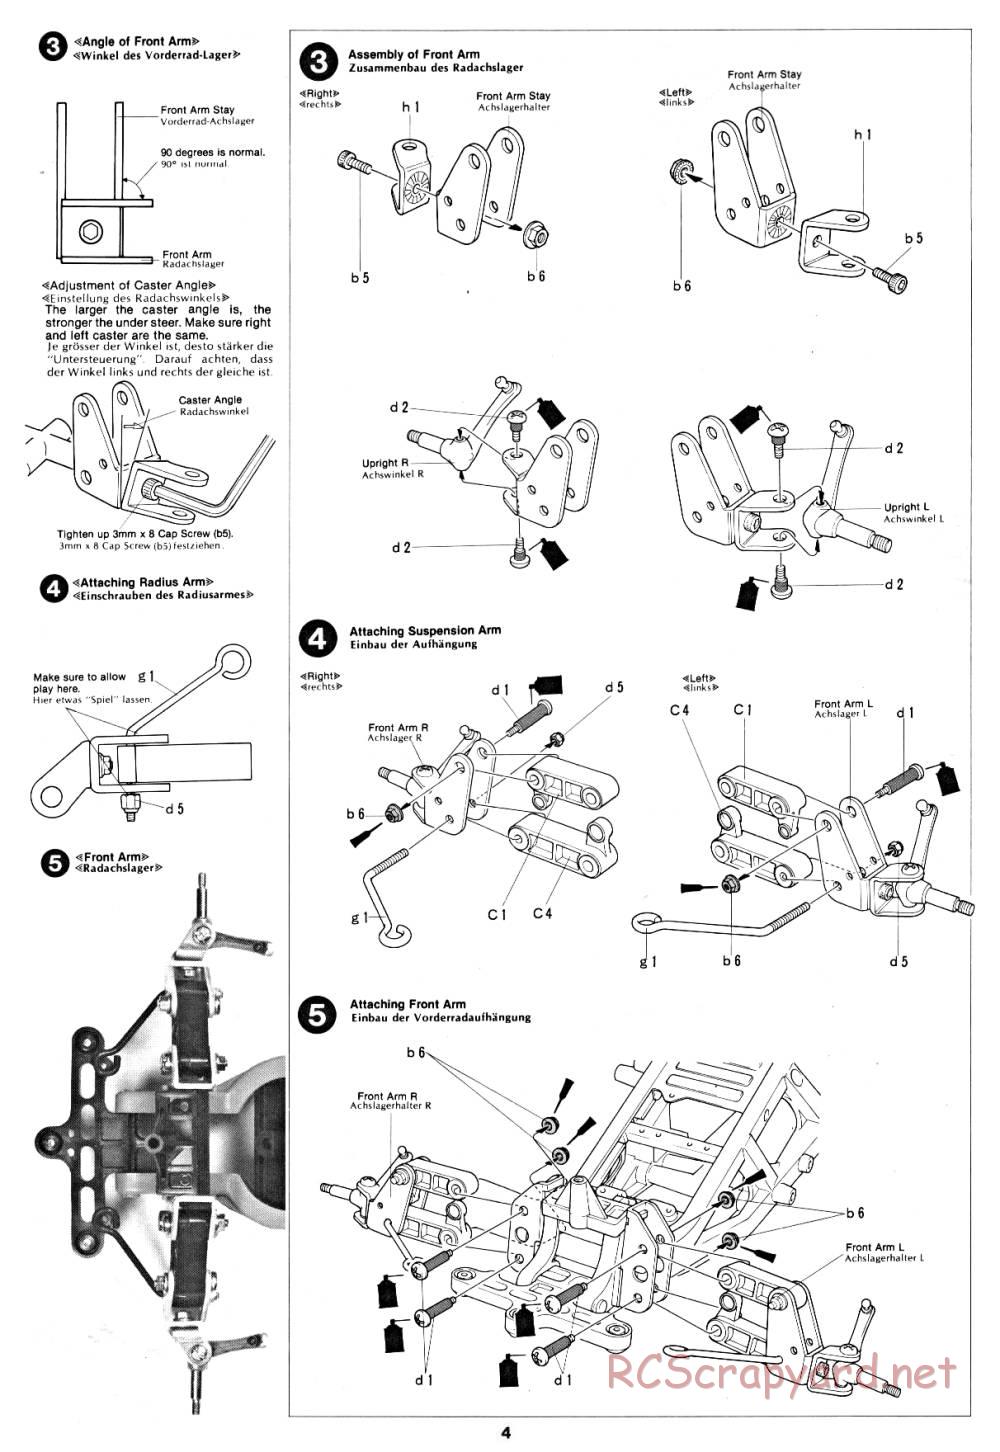 Tamiya - Subaru Brat - 58038 - Manual - Page 4